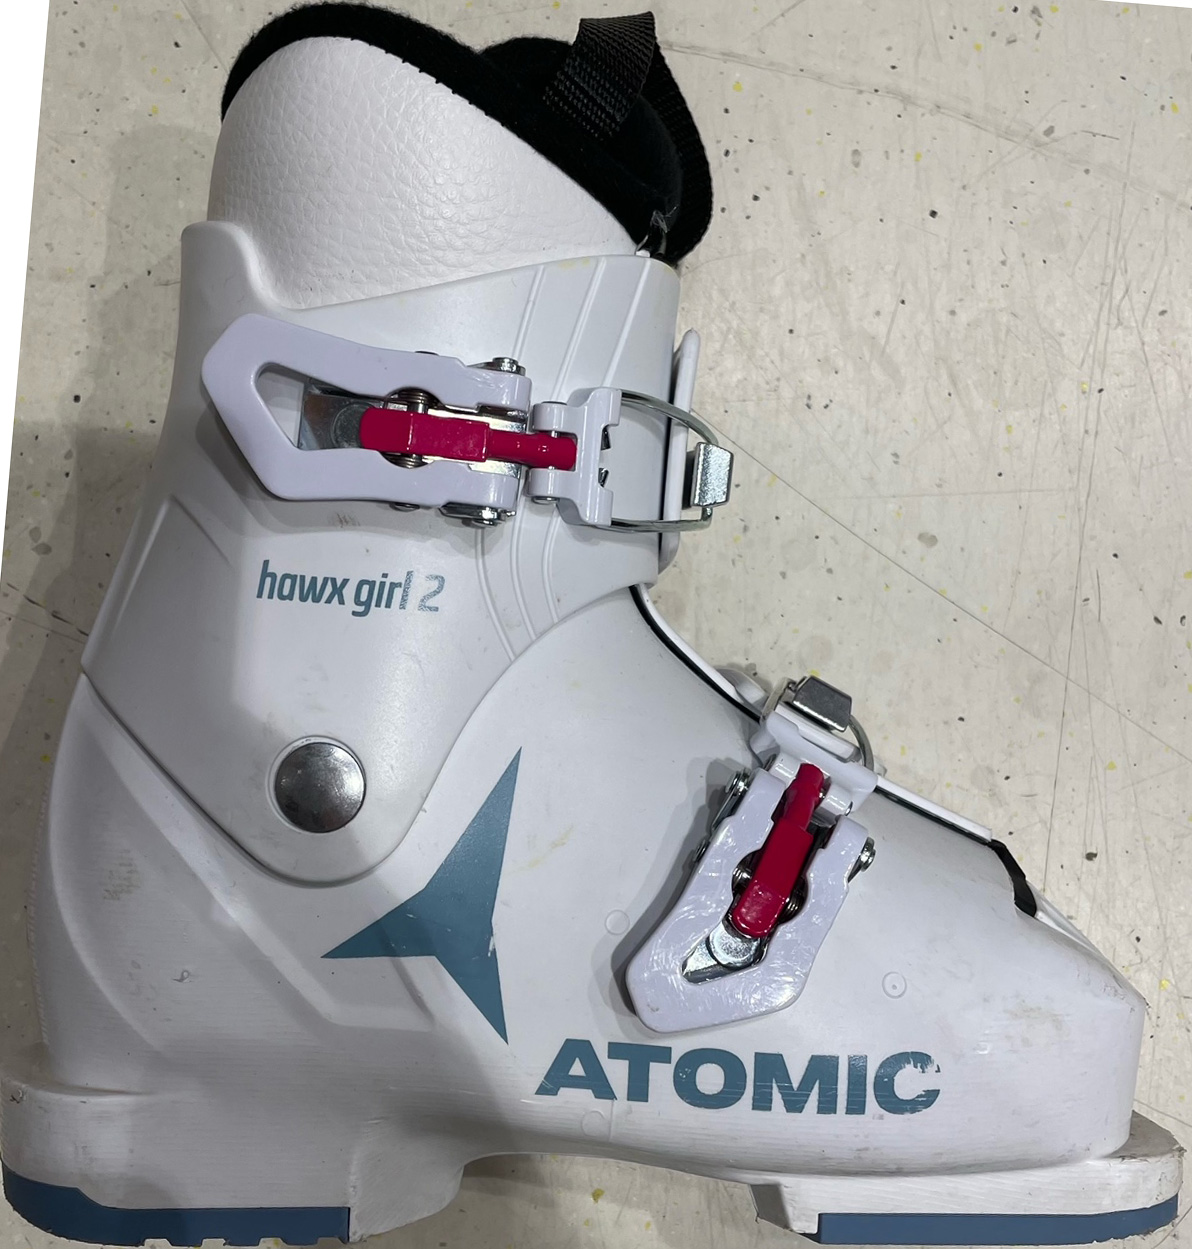 Atomic hawx Girl 2 used junior ski boot